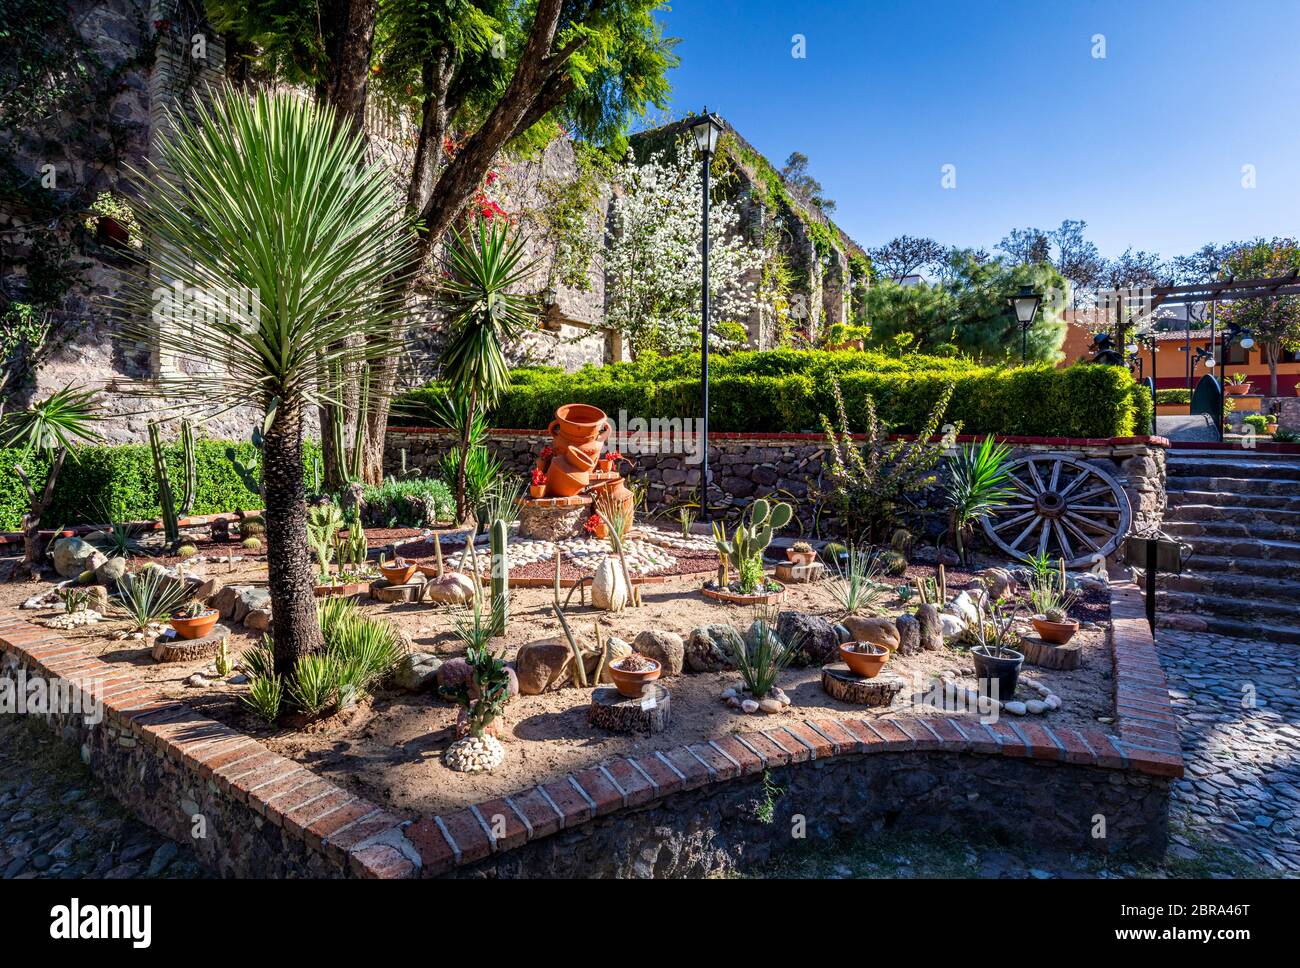 The cactus garden at Hacienda San Gabriel de Barrera in the city of Guanajuato, Mexico. Stock Photo